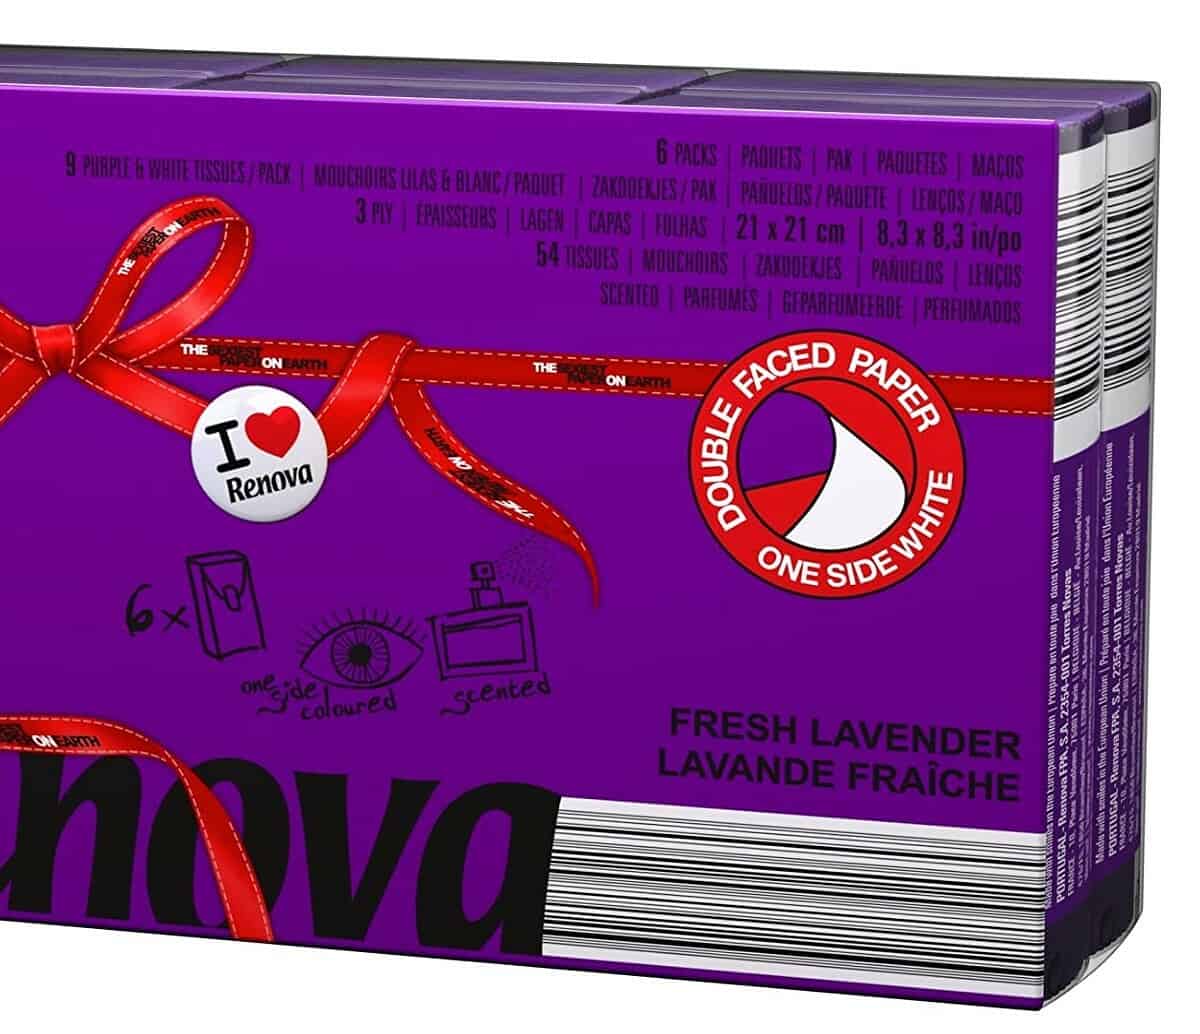 Renova Handkerchiefs Red Label Lavender Scented Lavender Packs Pack Amazon.de Health